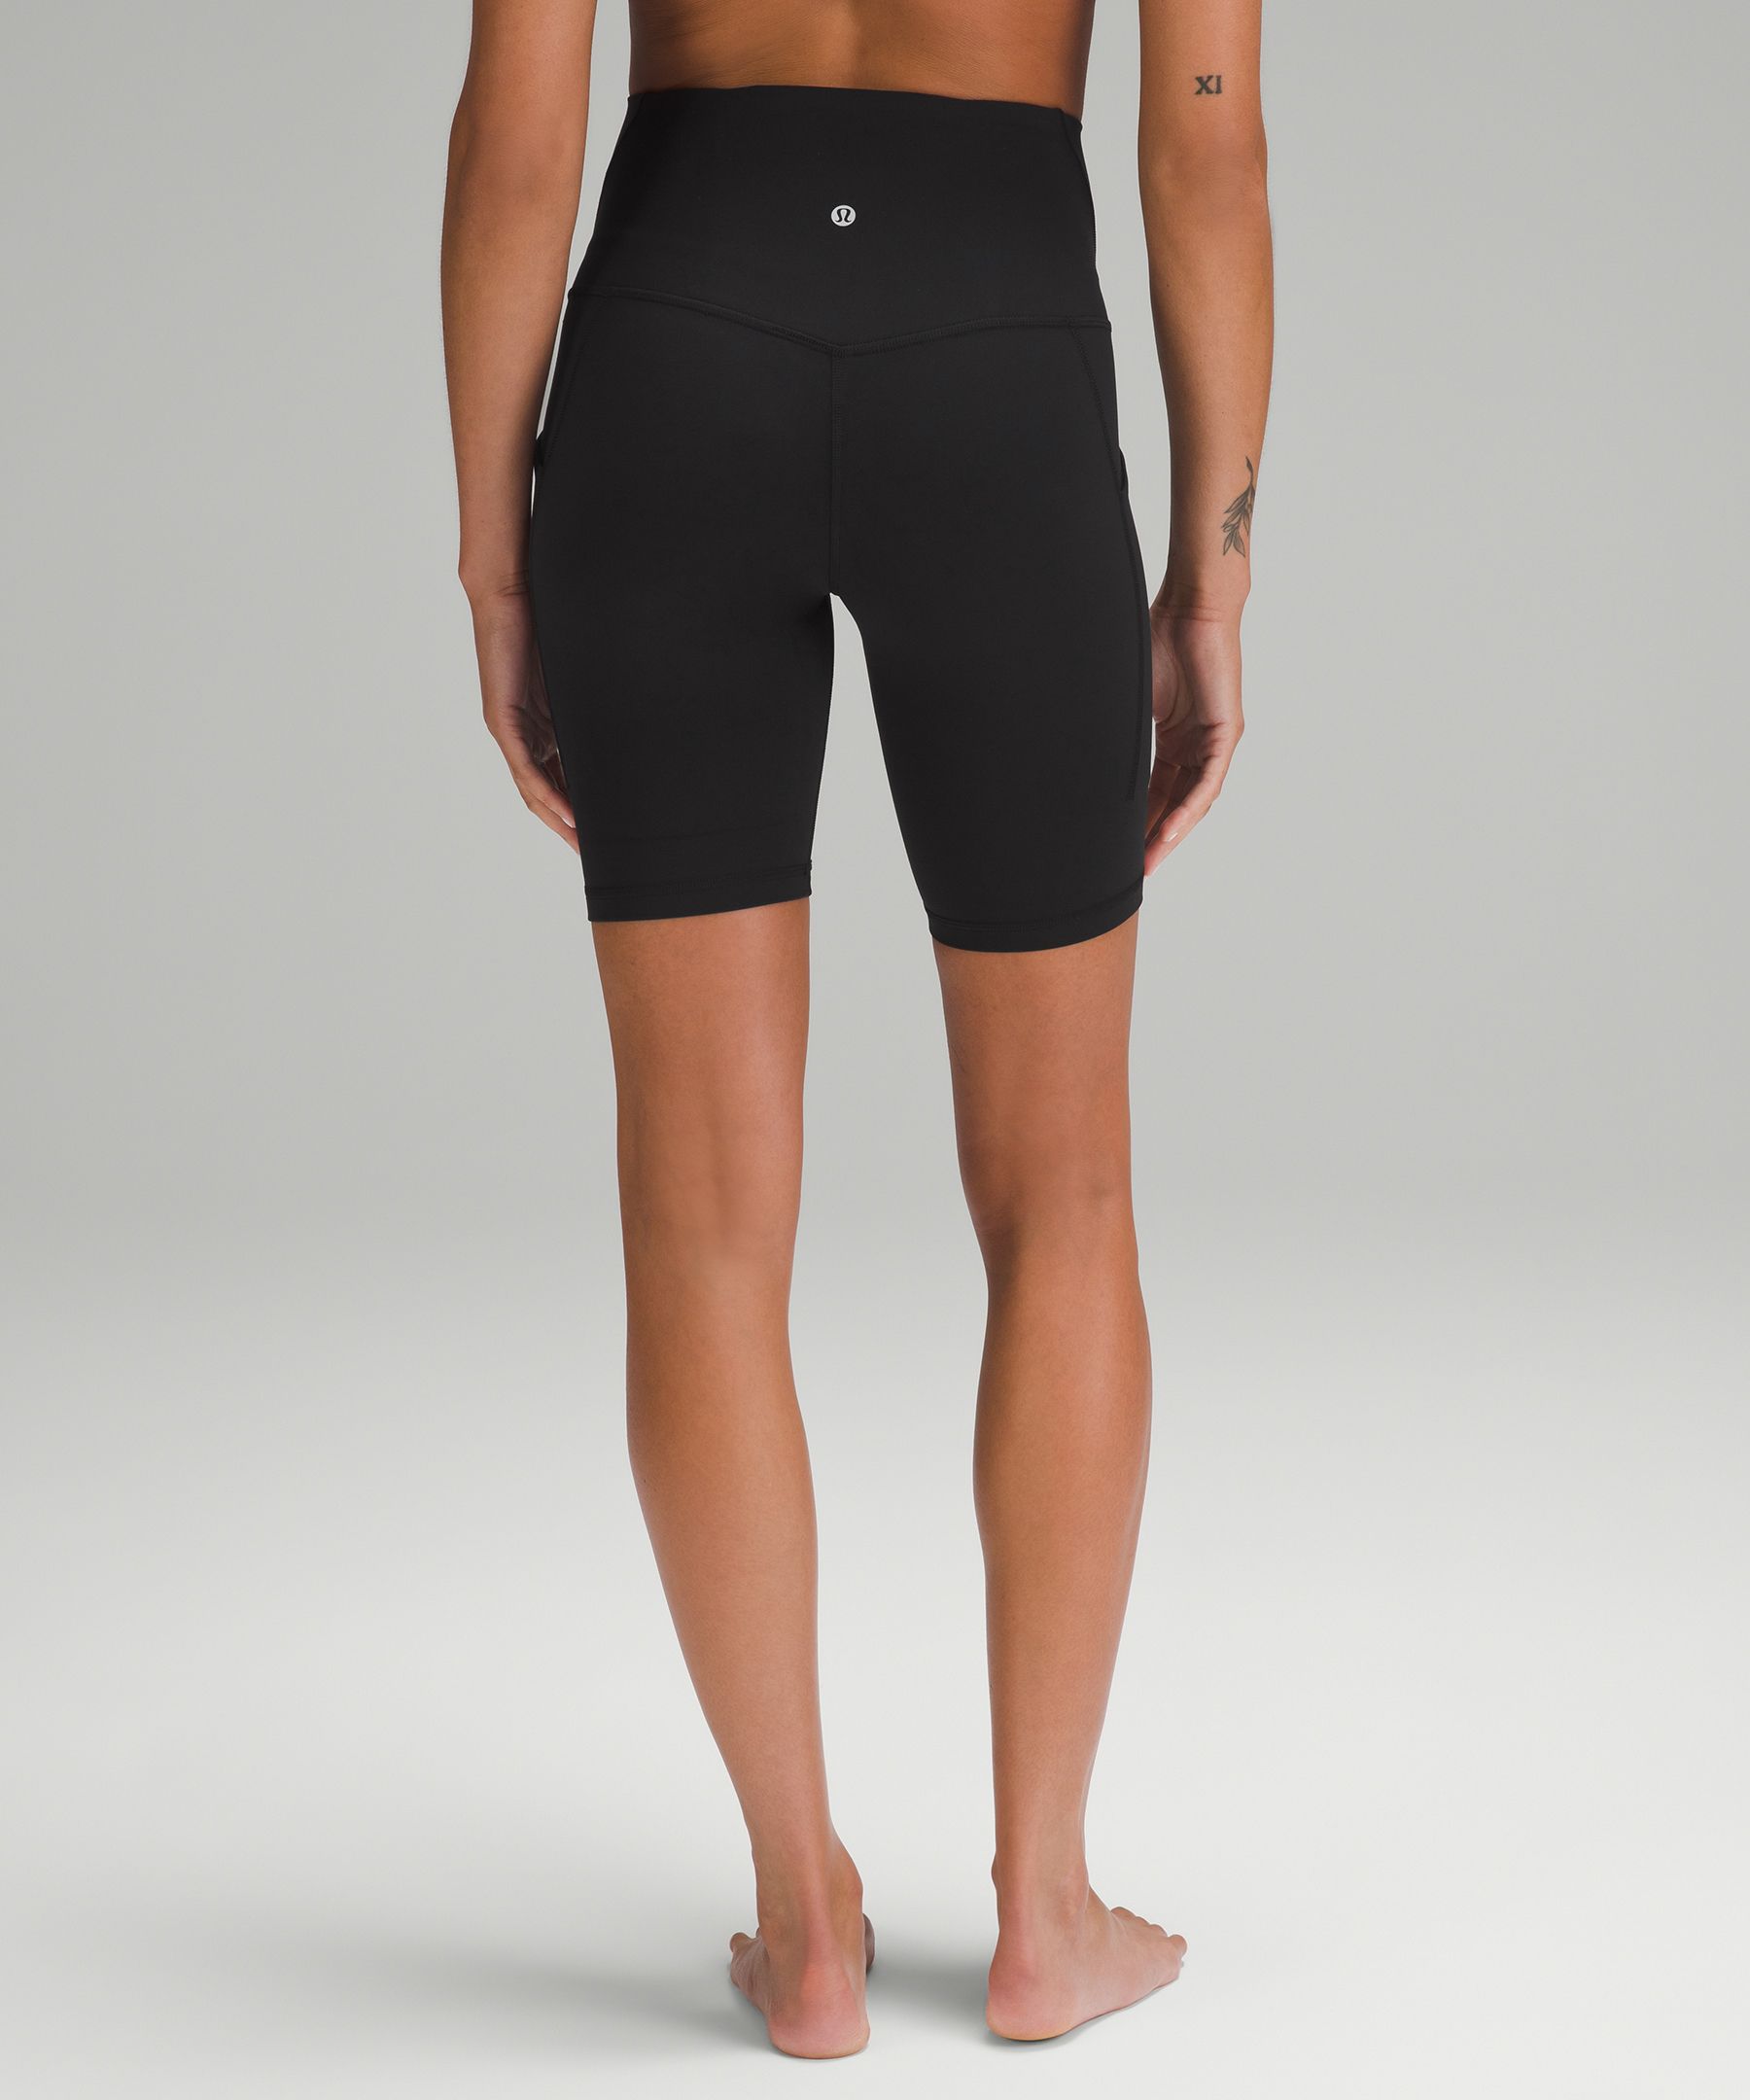 lululemon Align™ High-Rise Short with Pockets 8, Women's Shorts